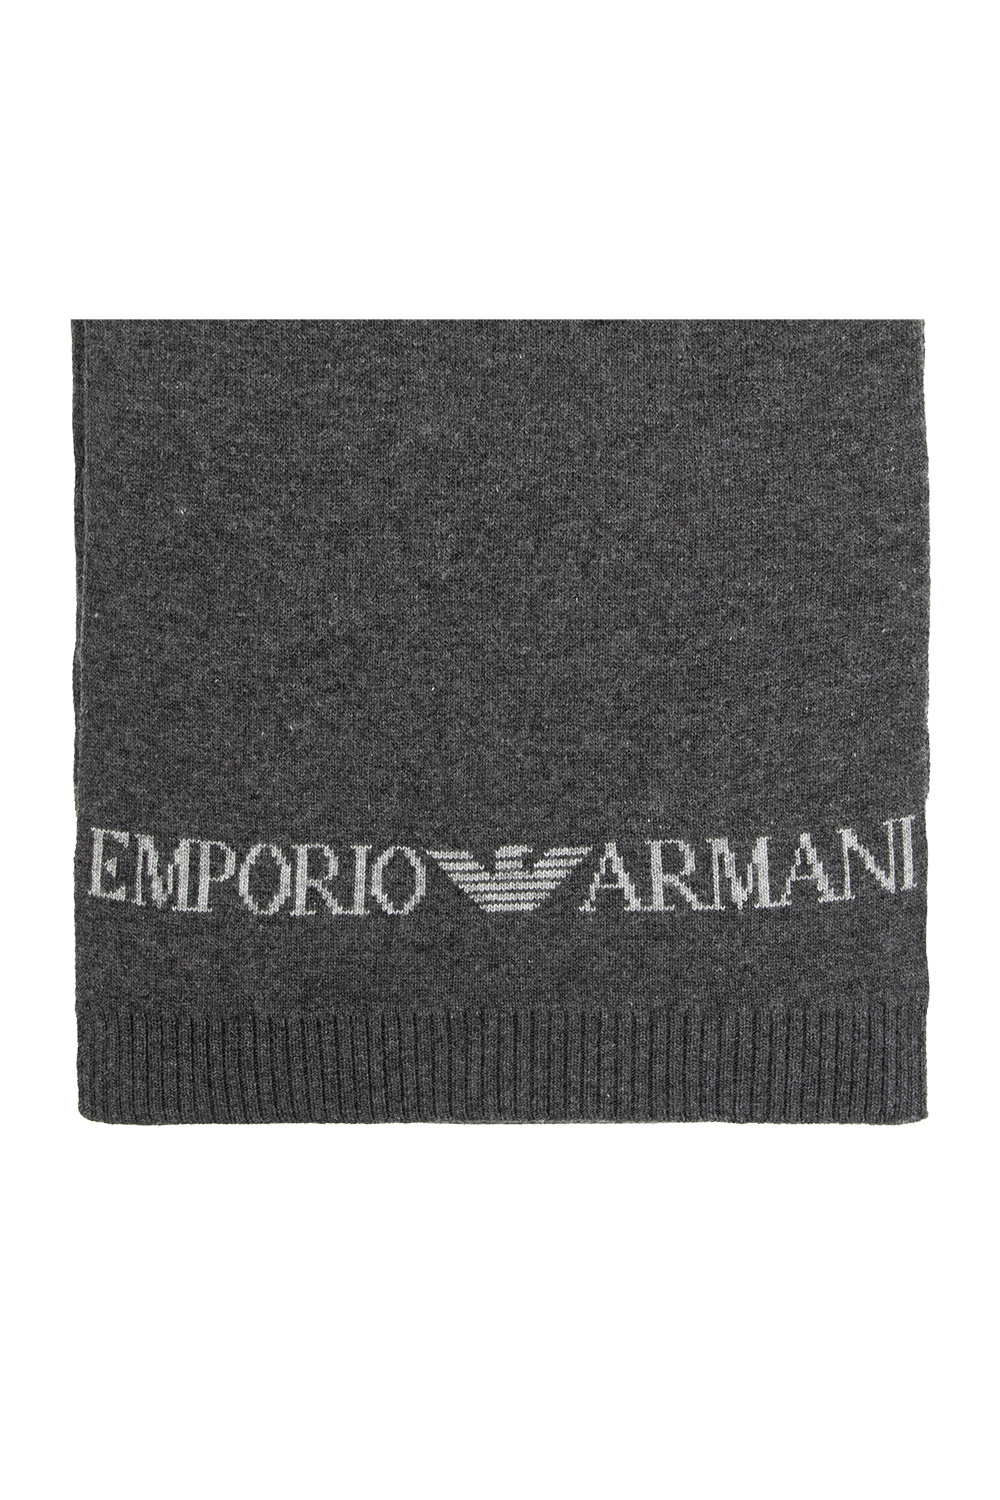 Emporio Armani Palm Angels & Missoni Monogram bah752991 hat